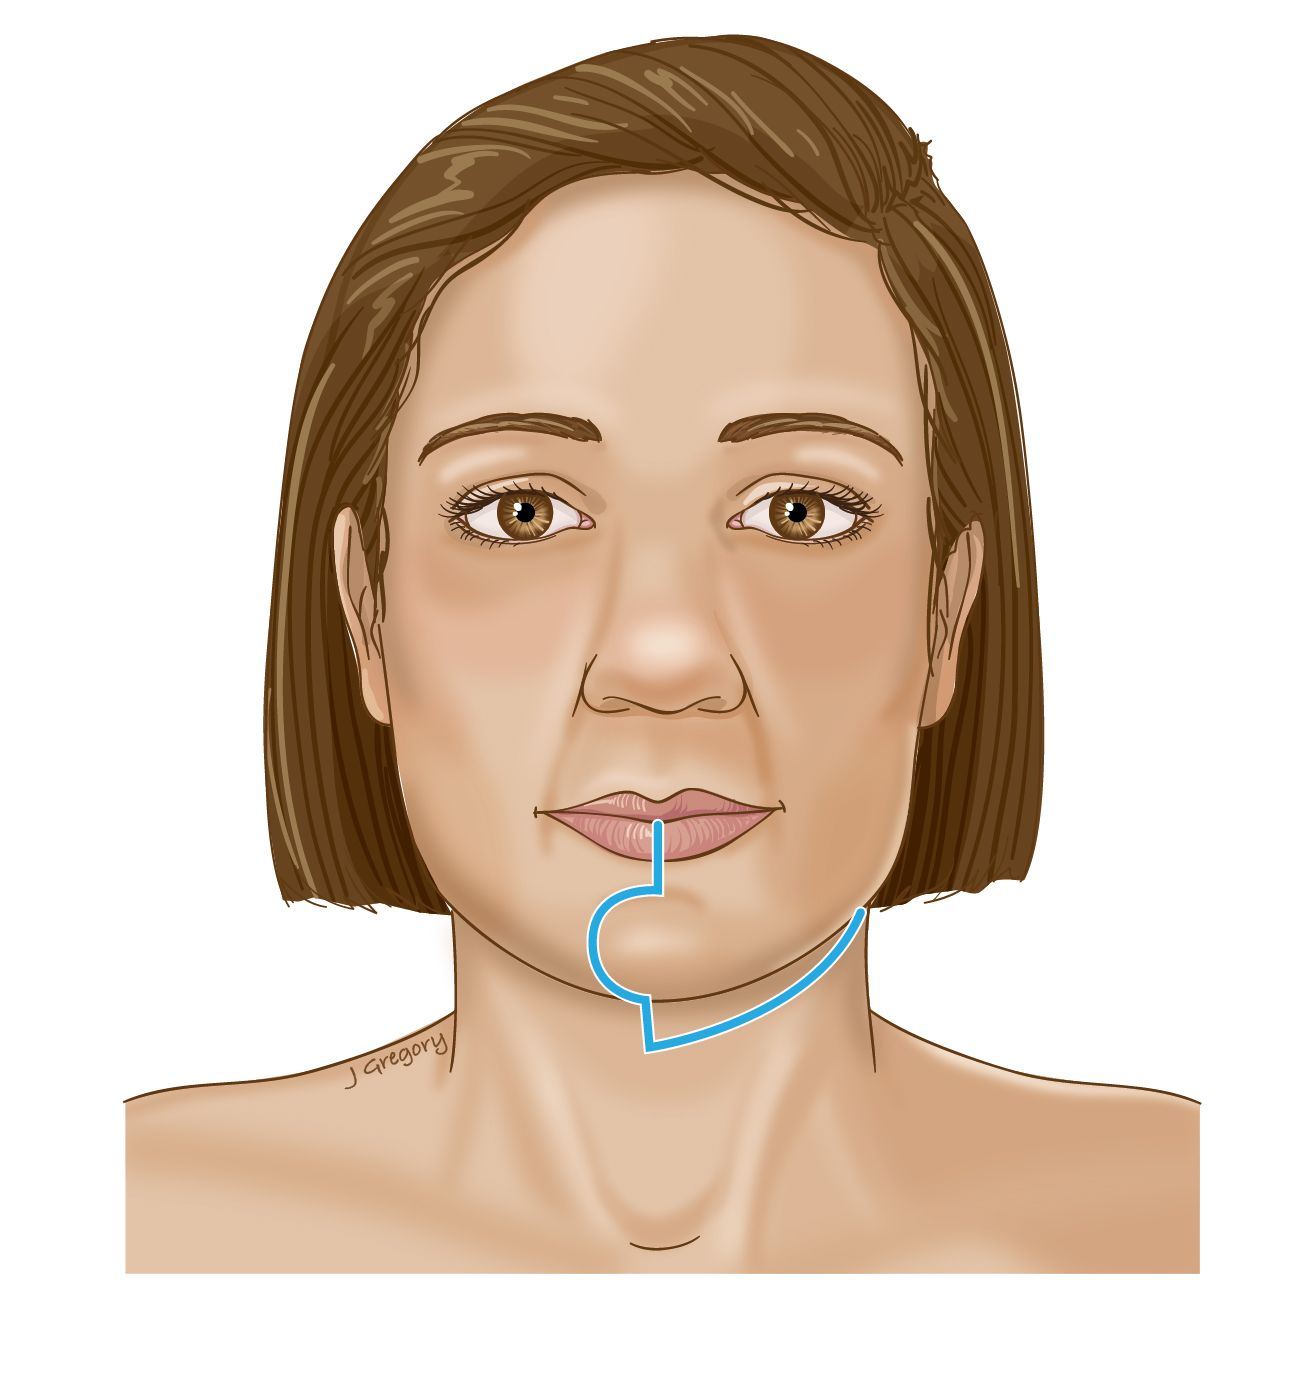 Reconstructive surgery facial jaw post radiation